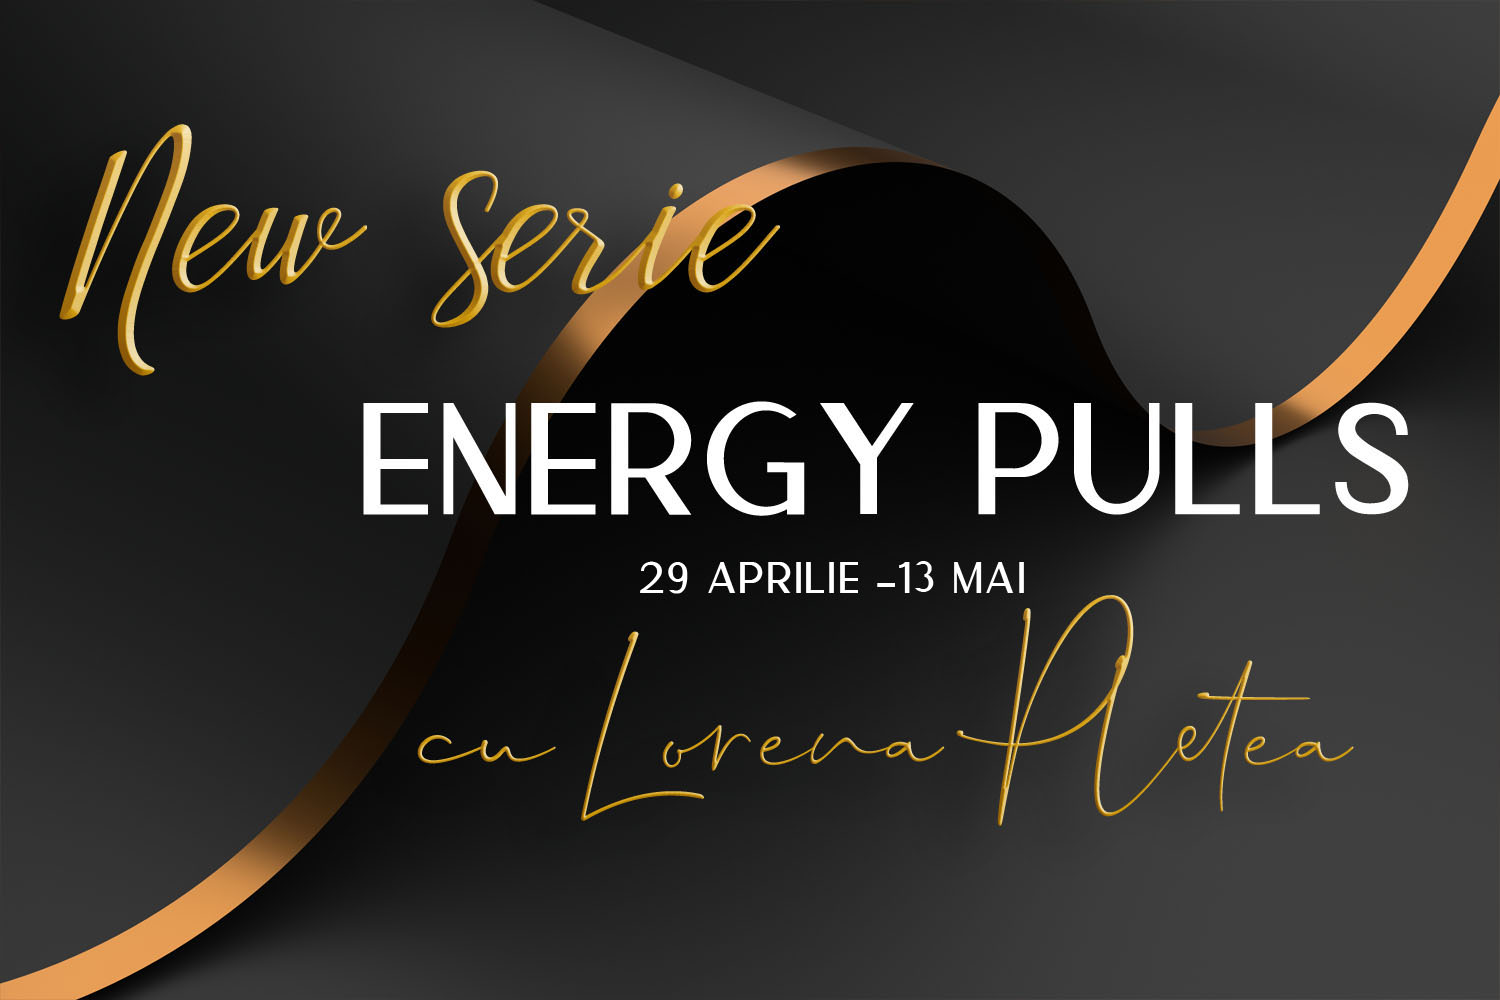 Energy Pulls – New series – 29 aprilie -13 mai